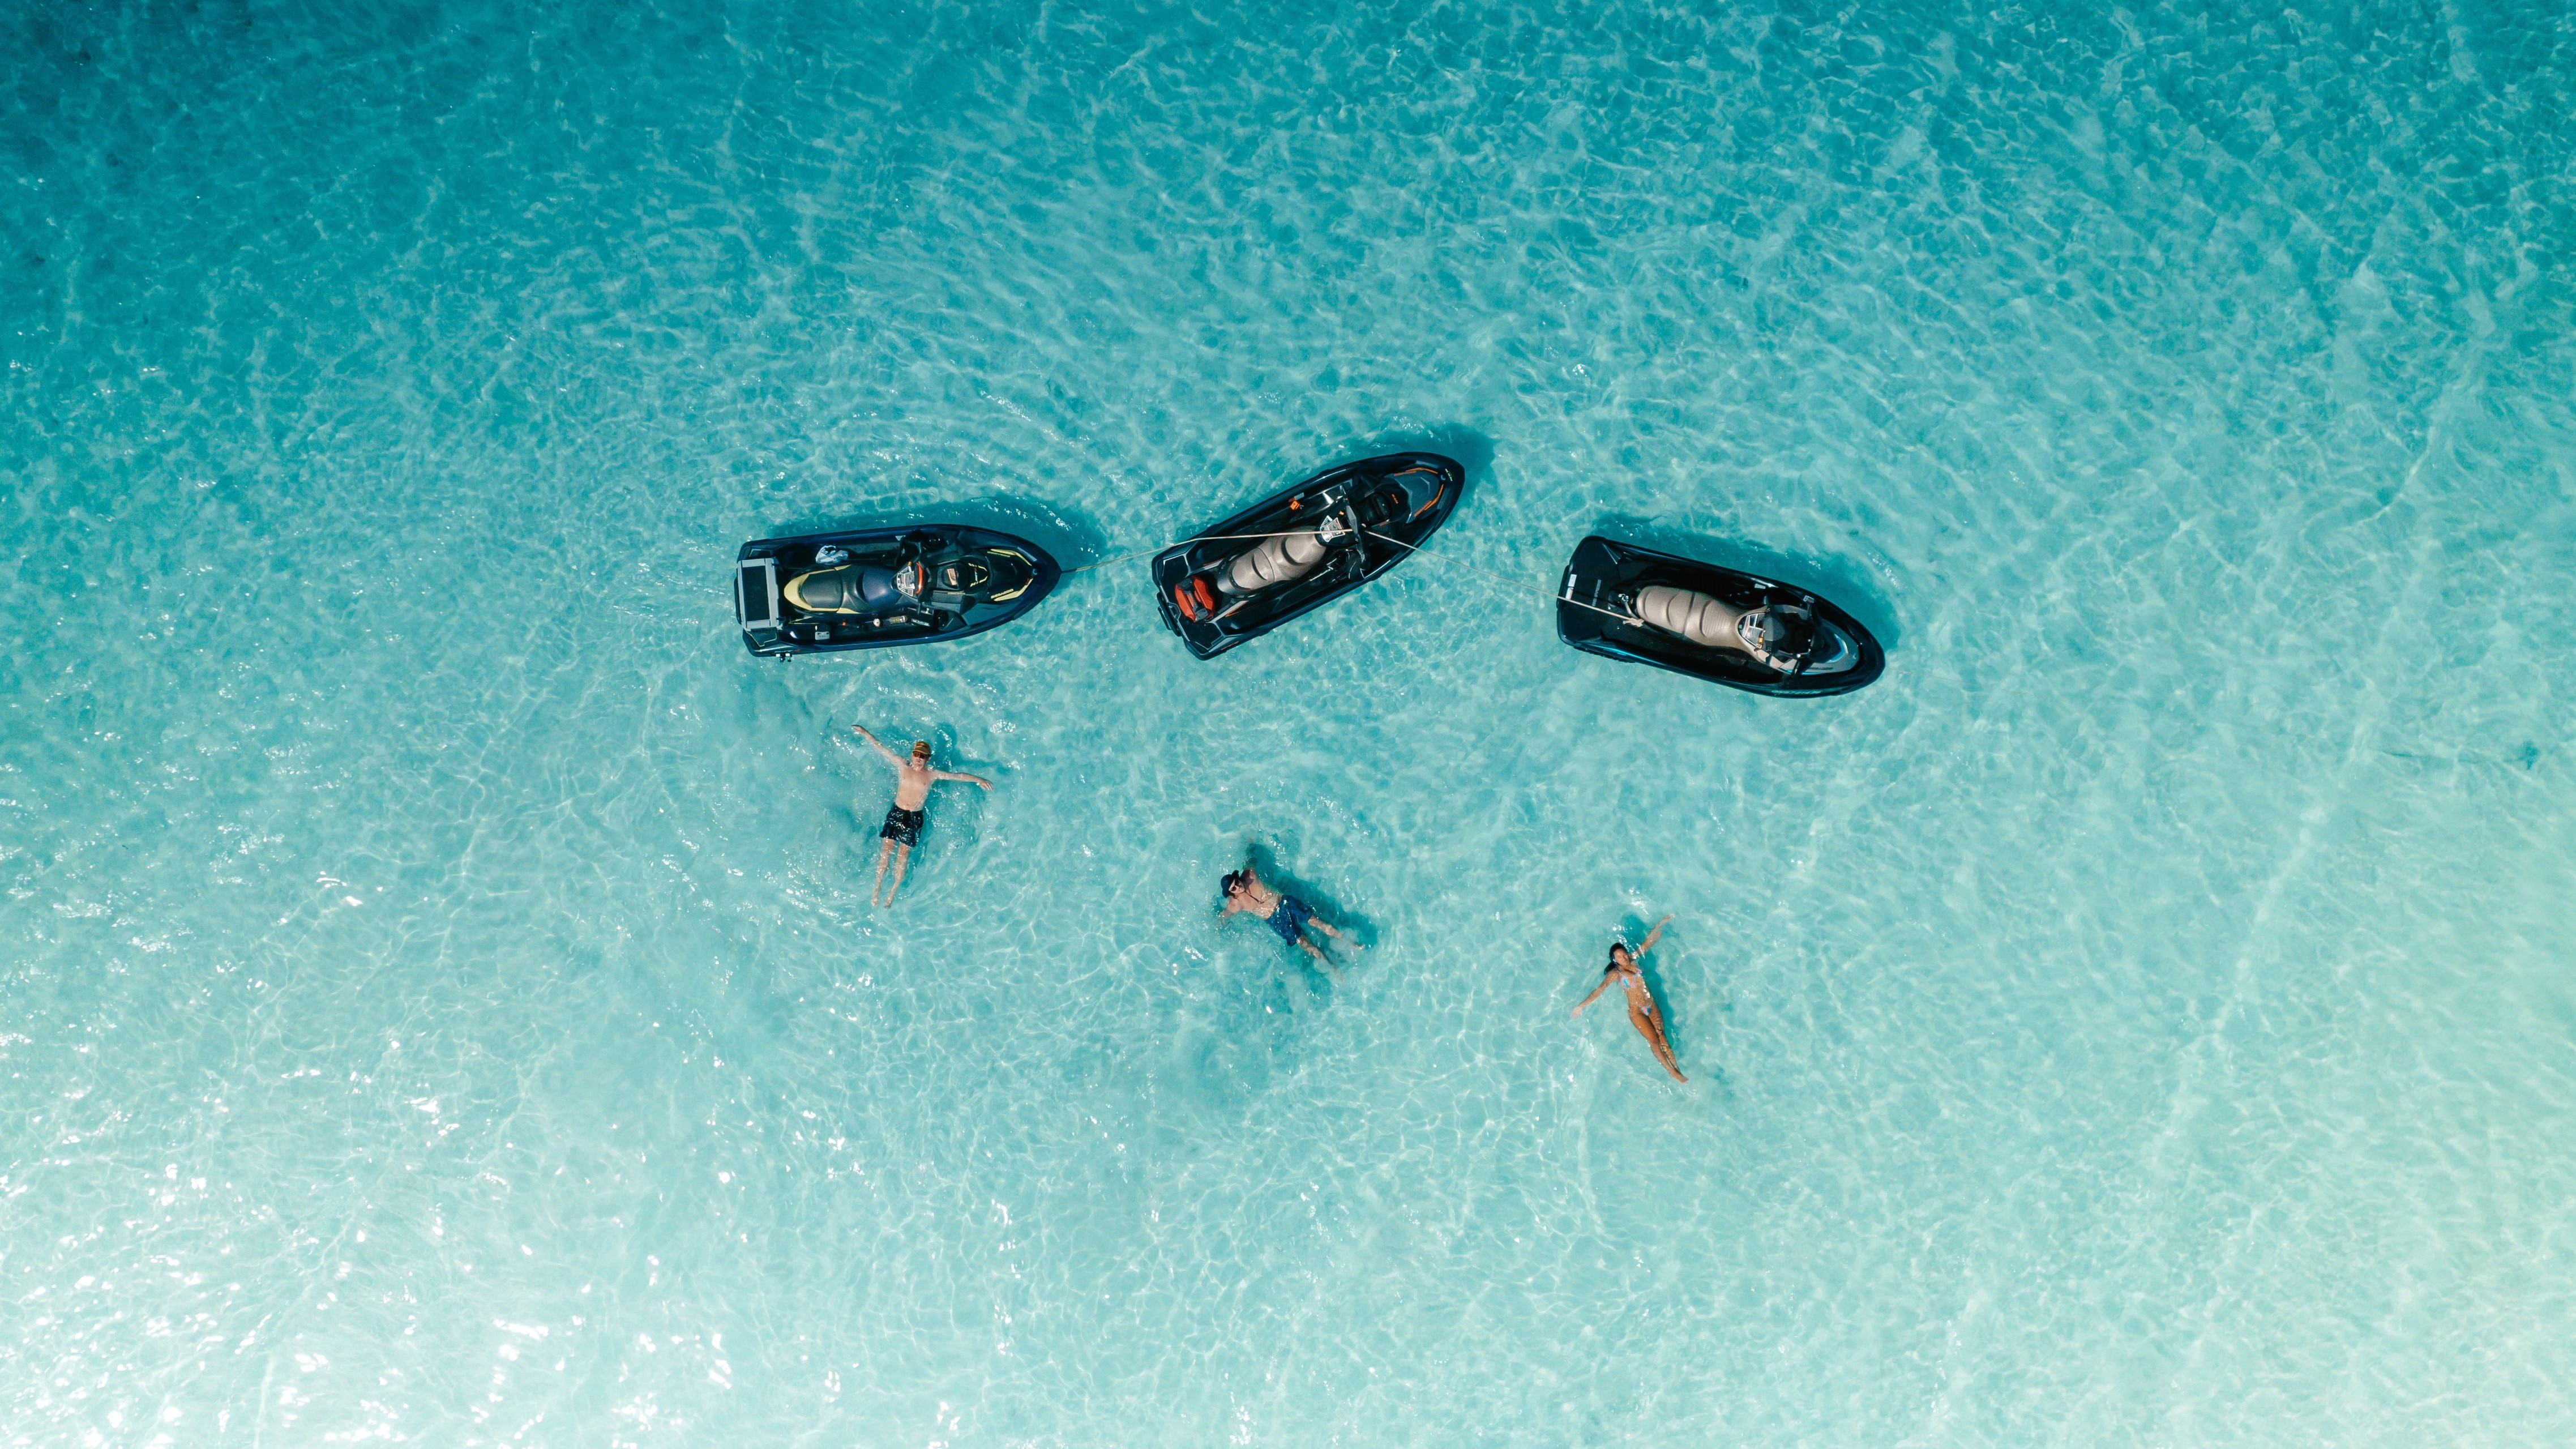 Adventure-seekers swimming next to their Sea-Doo